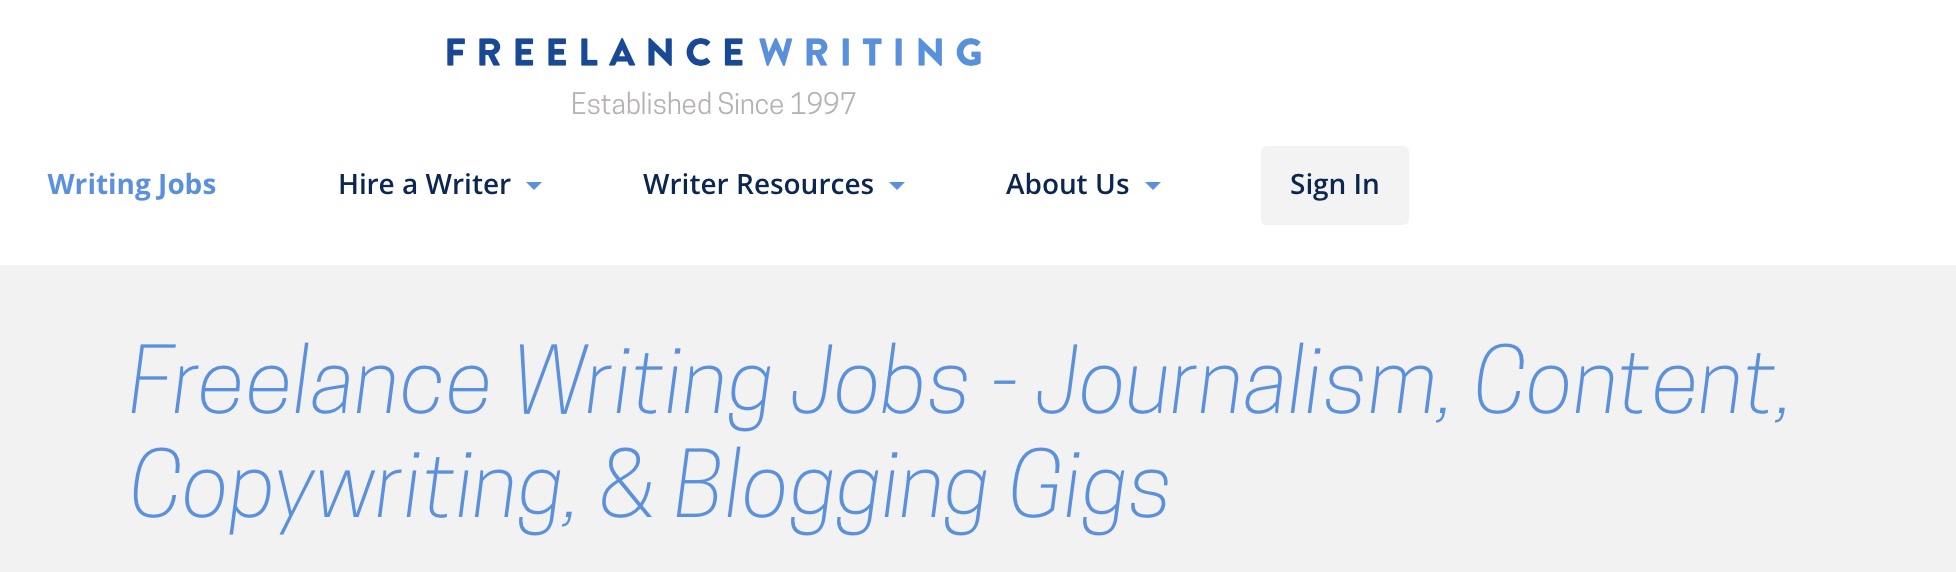 freelancewriting.com job board